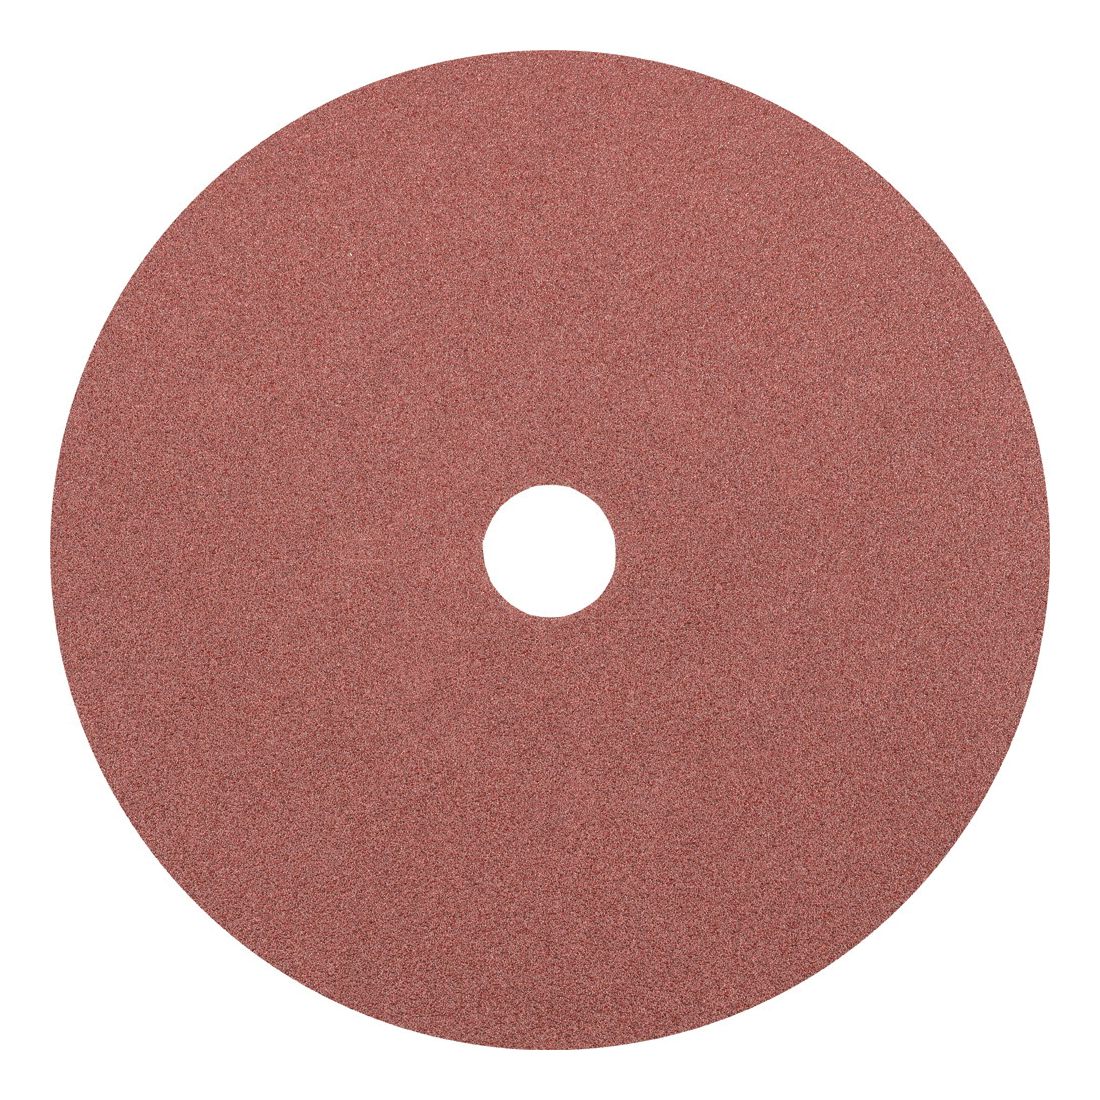 PFERD 62706 Standard Coated Abrasive Disc, 7 in Dia, 7/8 in Center Hole, 80 Grit, Aluminum Oxide Abrasive, Arbor Attachment